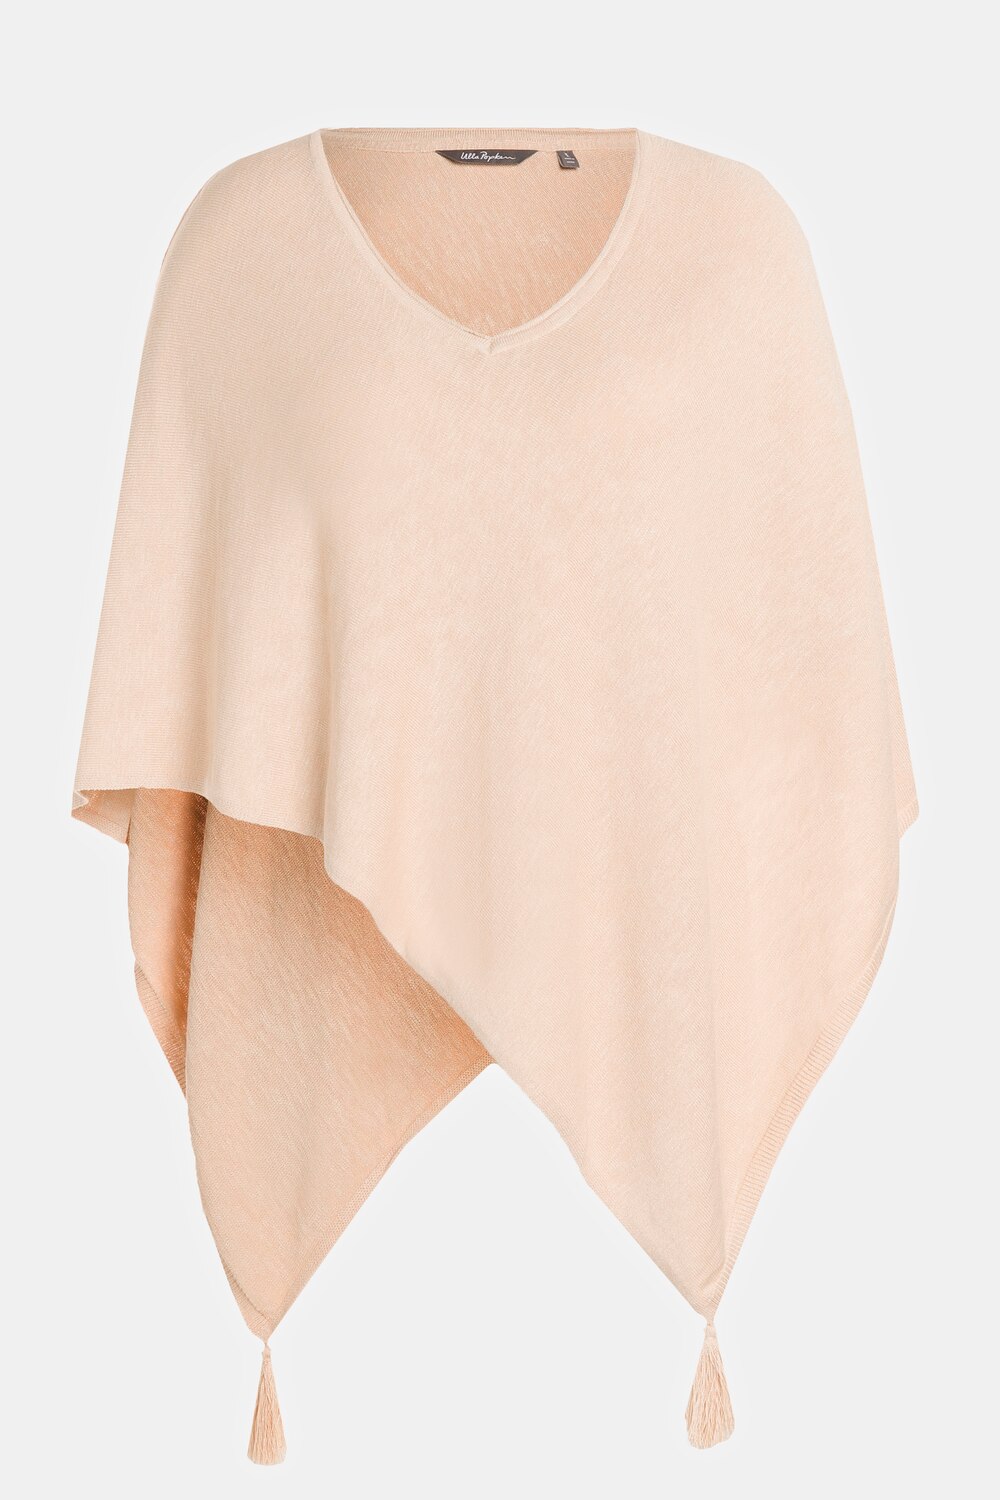 Plus Size Fine Ribbed Knit Tassel Trim Poncho, Woman, beige, size: 24-30, viscose/cotton/synthetic fibers, Ulla Popken